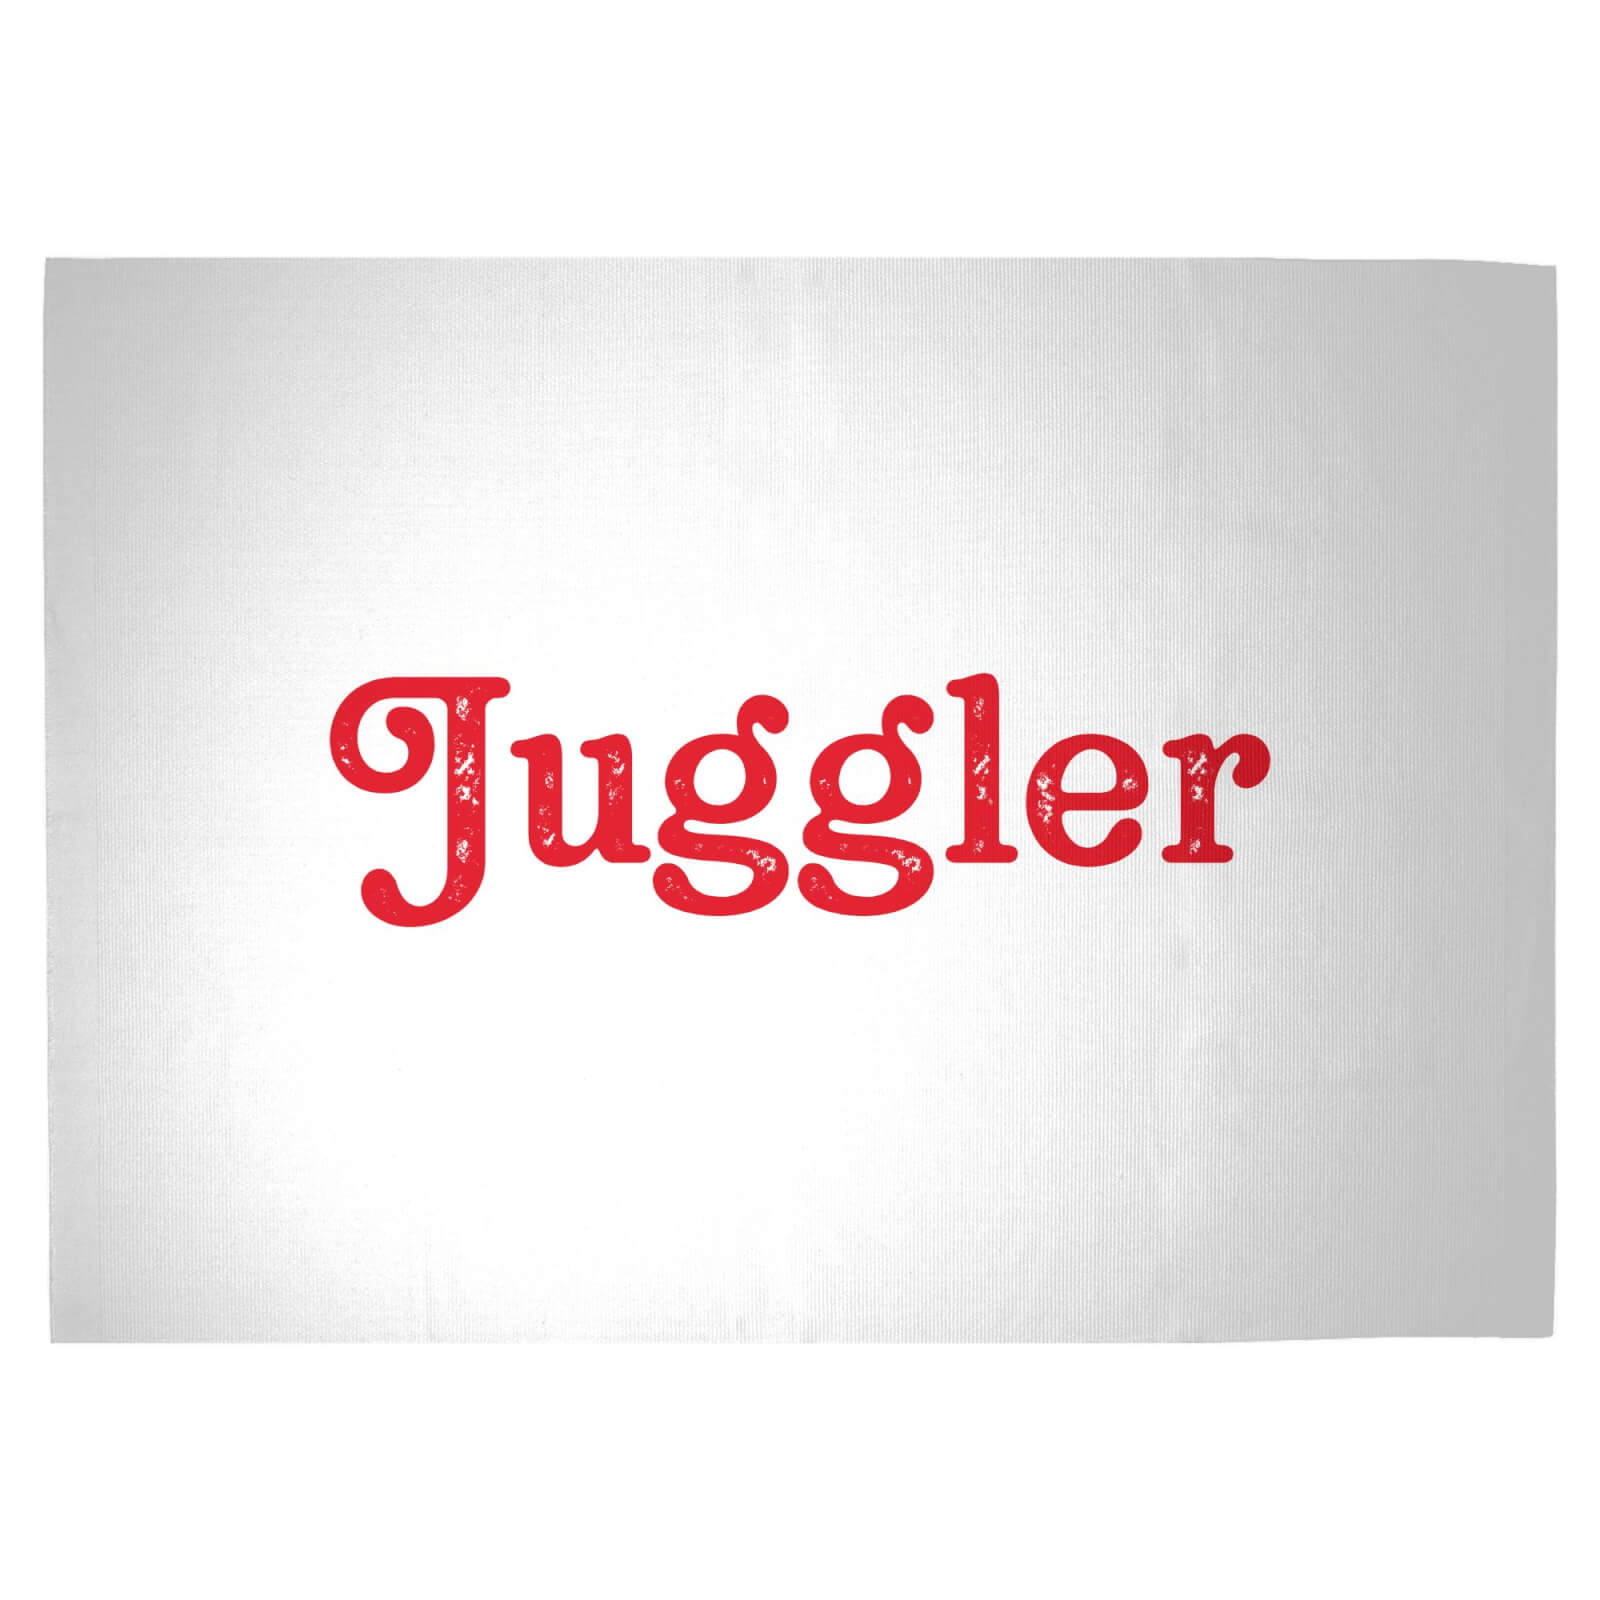 Juggler Woven Rug - Large